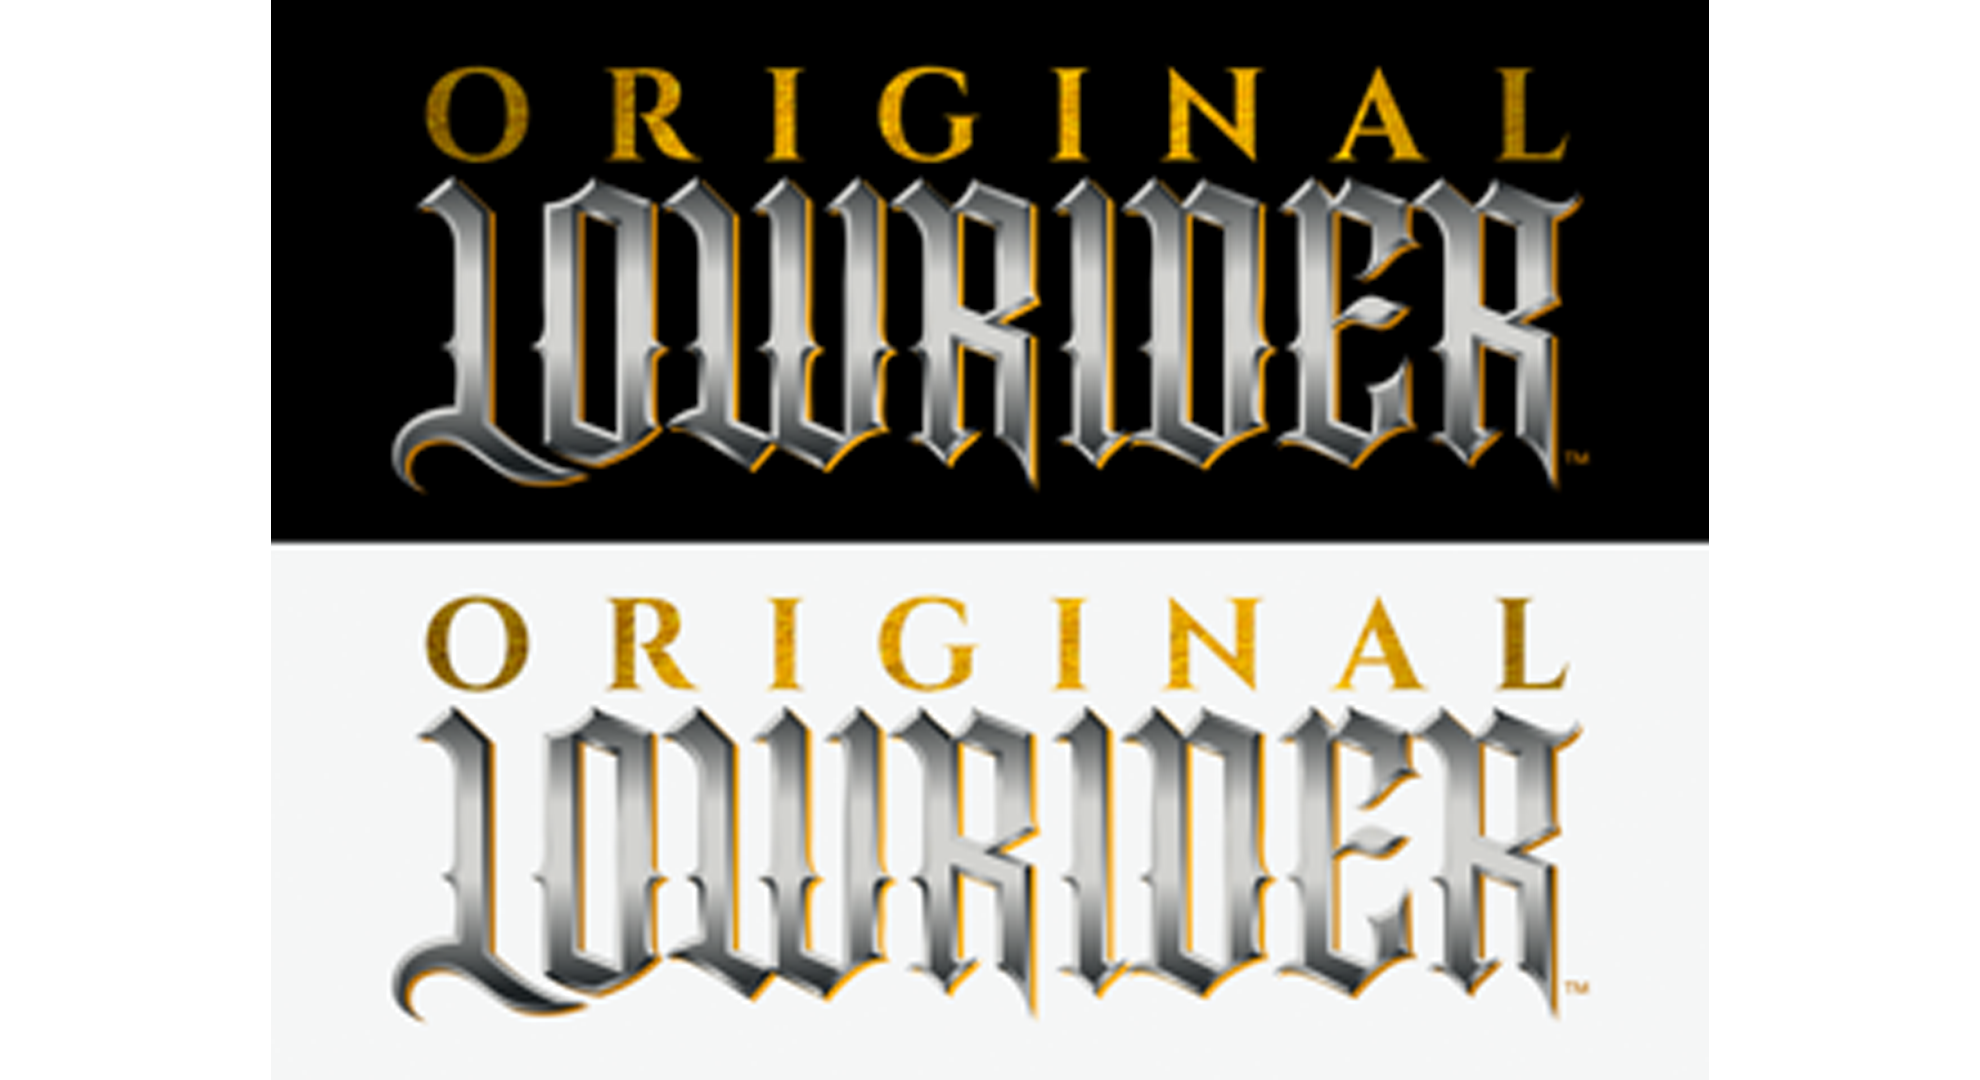 lowrider logo png